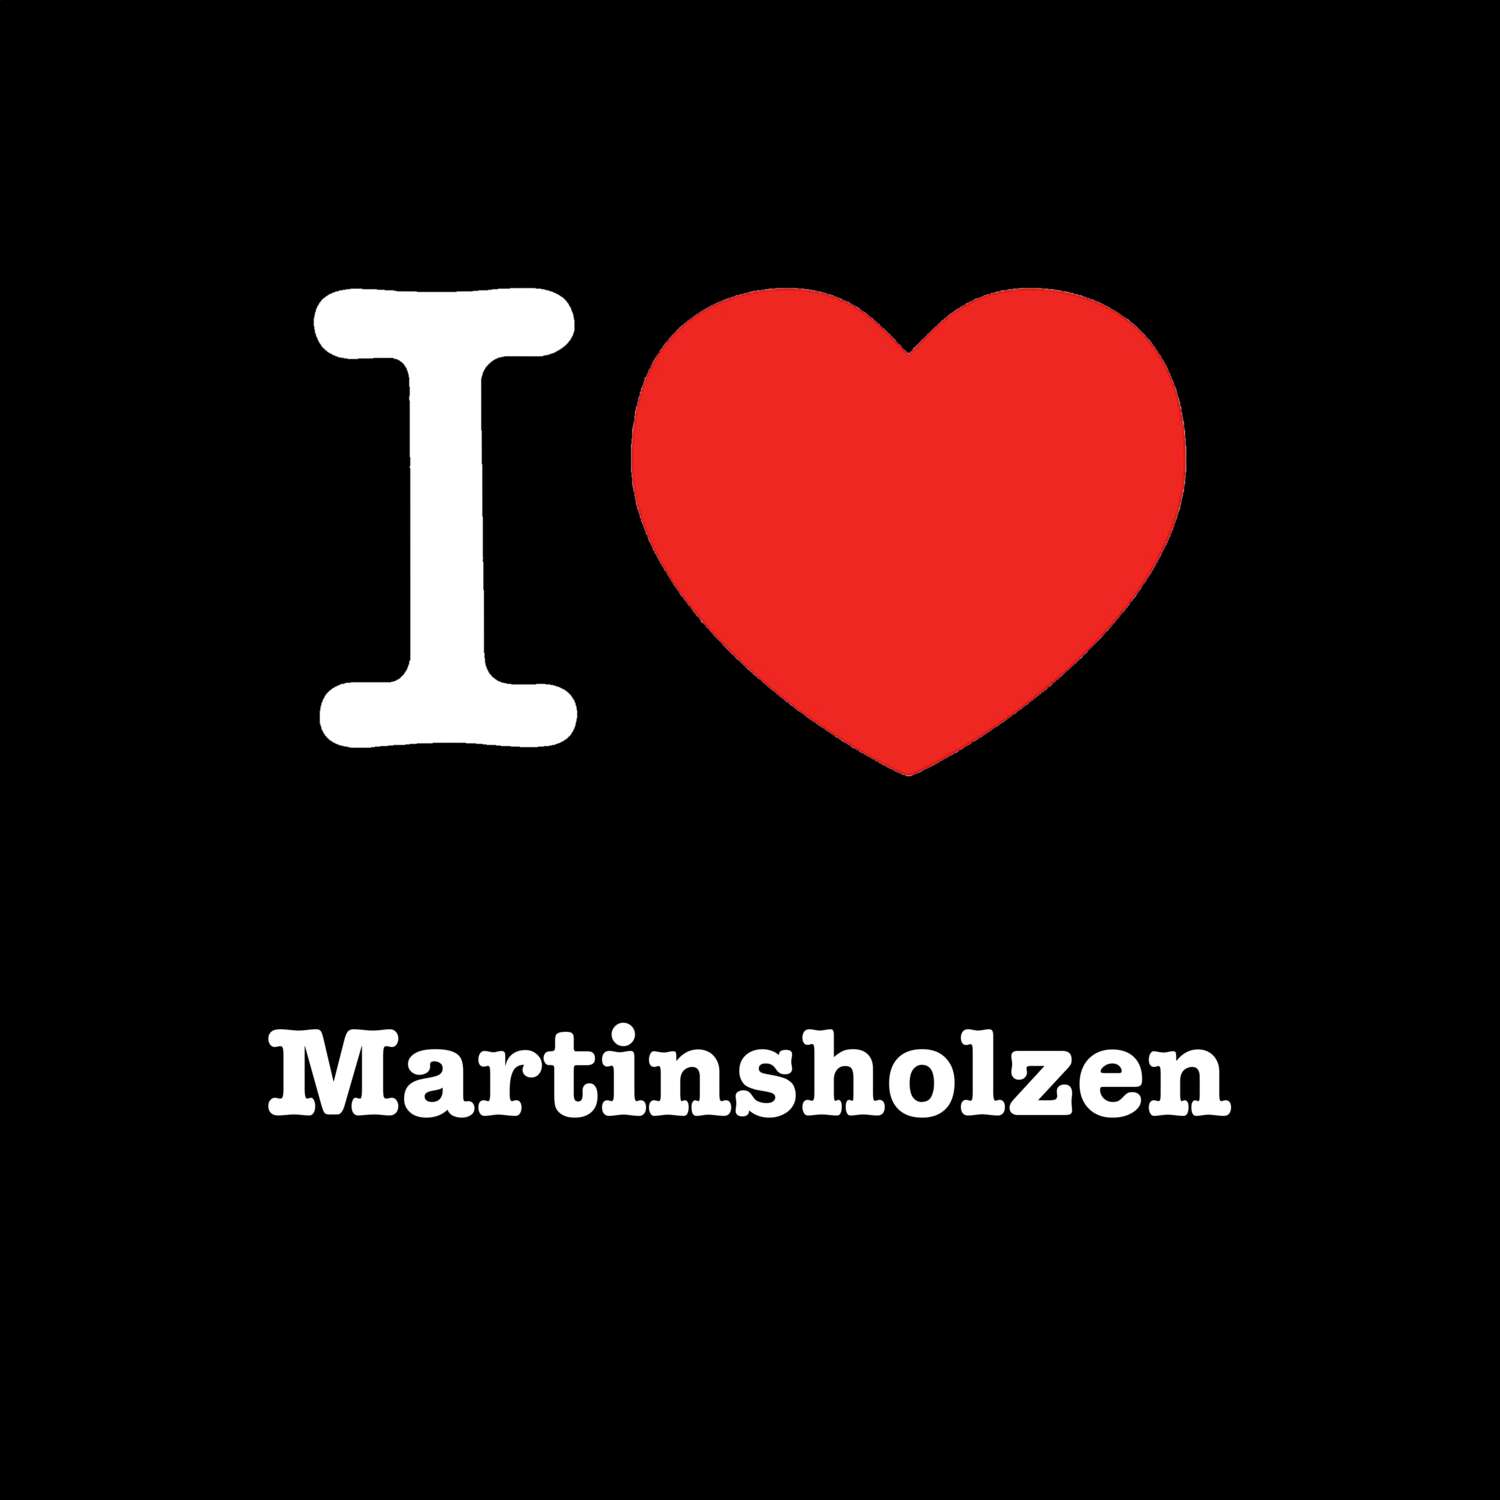 Martinsholzen T-Shirt »I love«